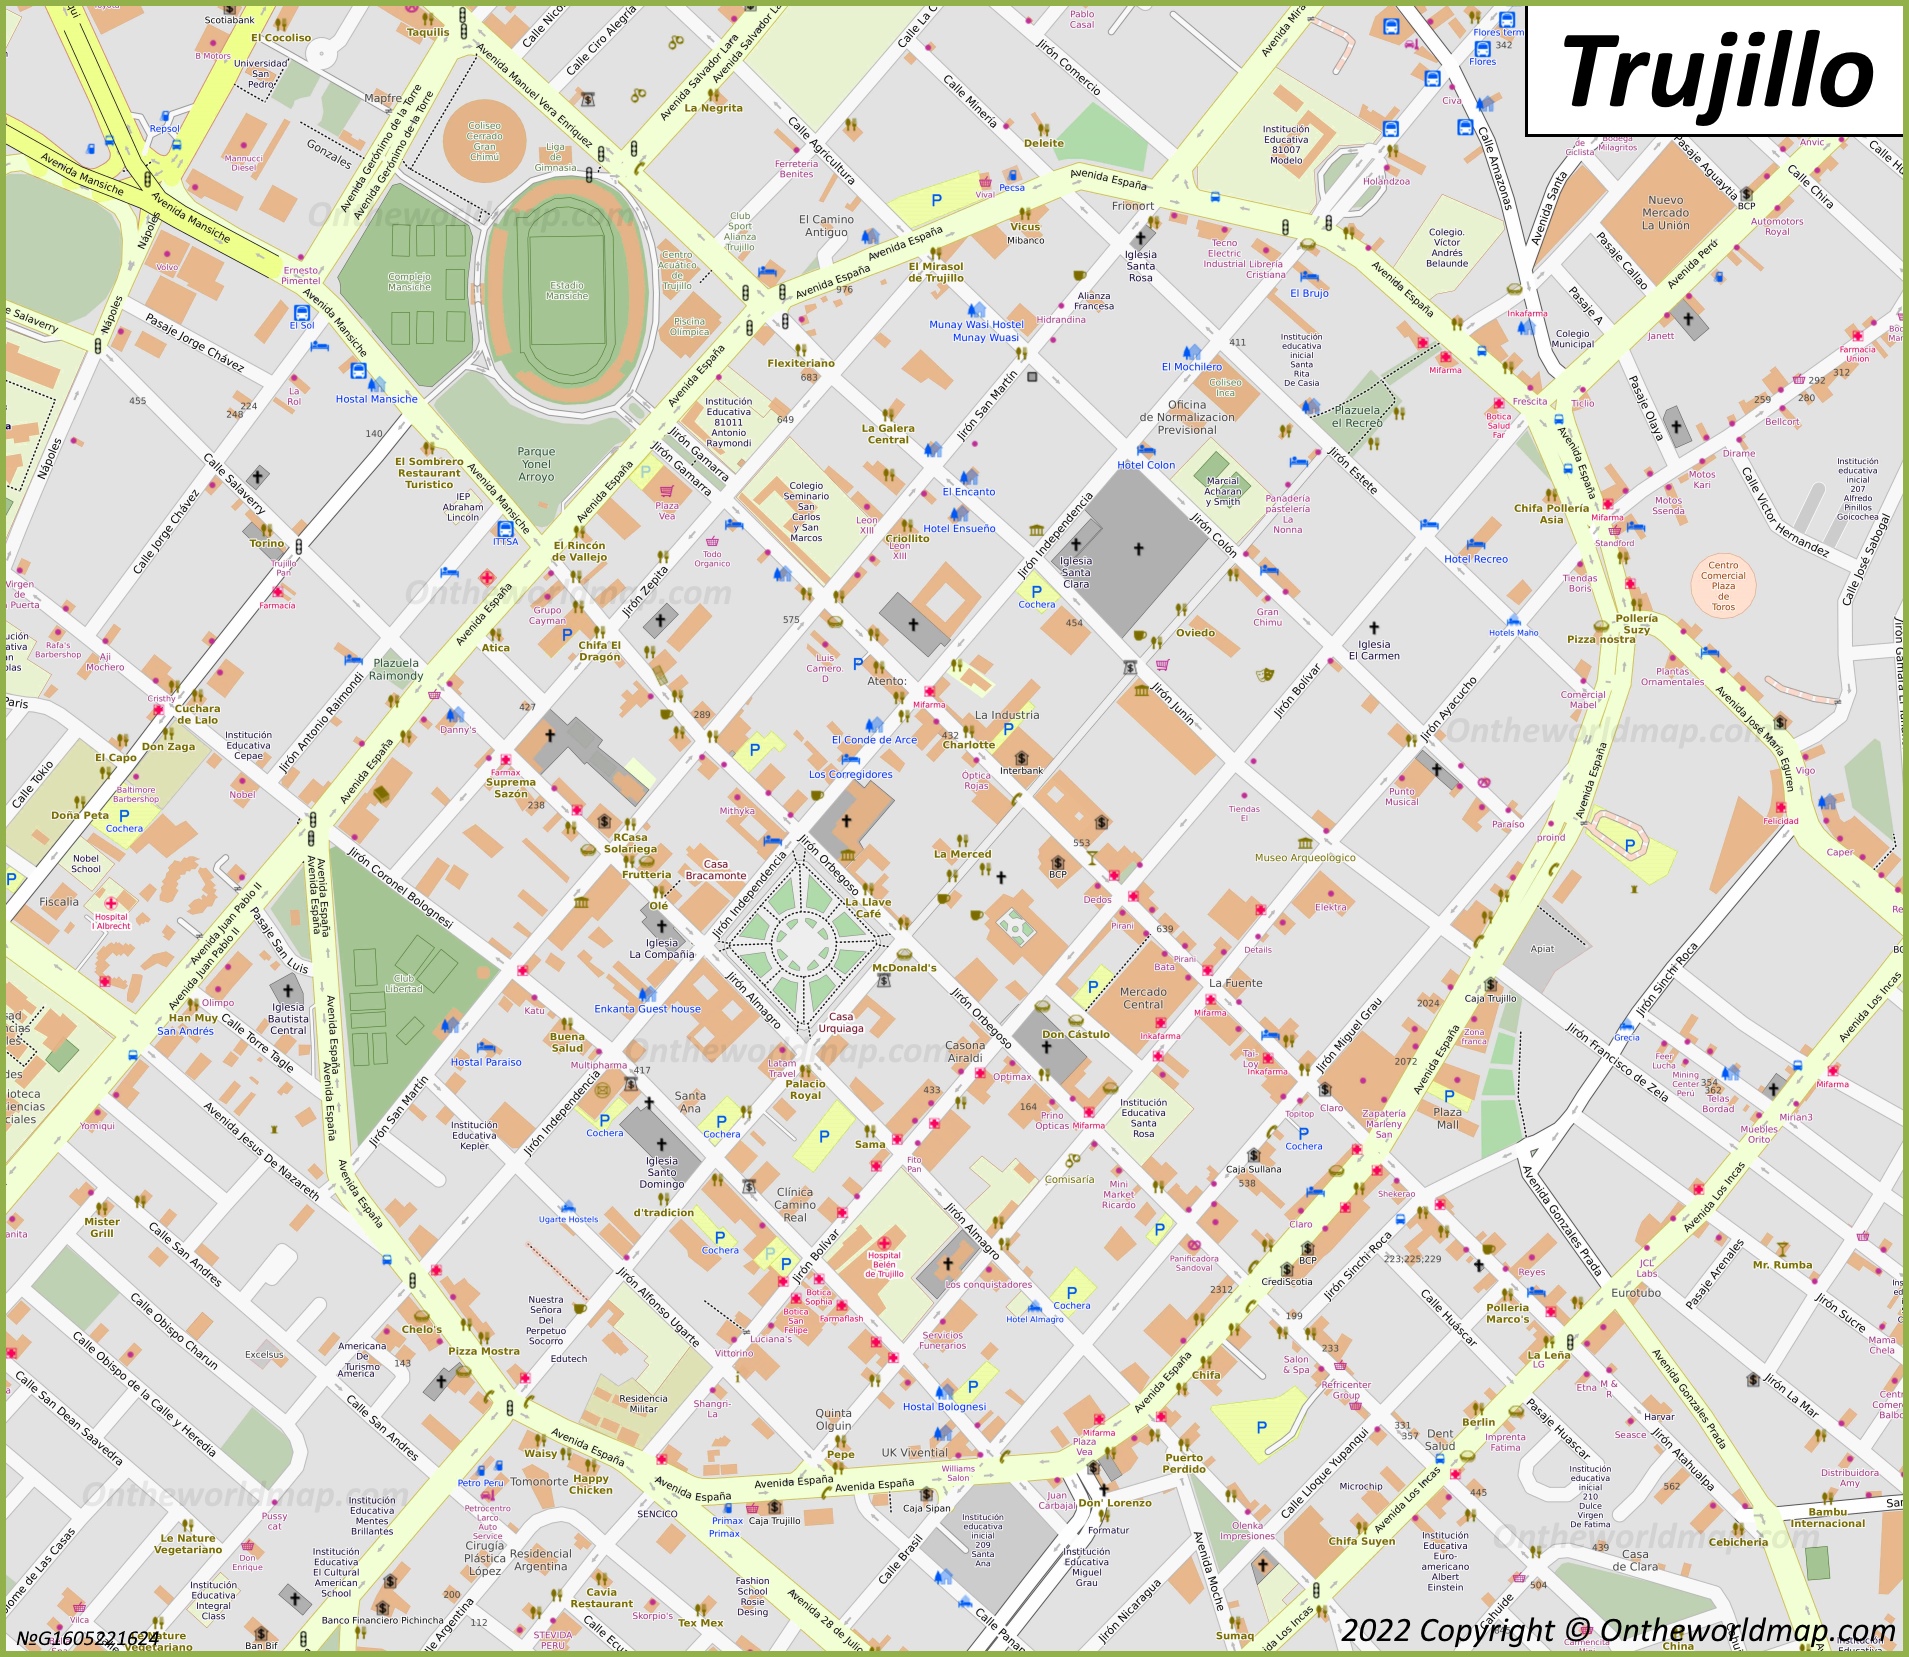 Trujillo Old Town Map